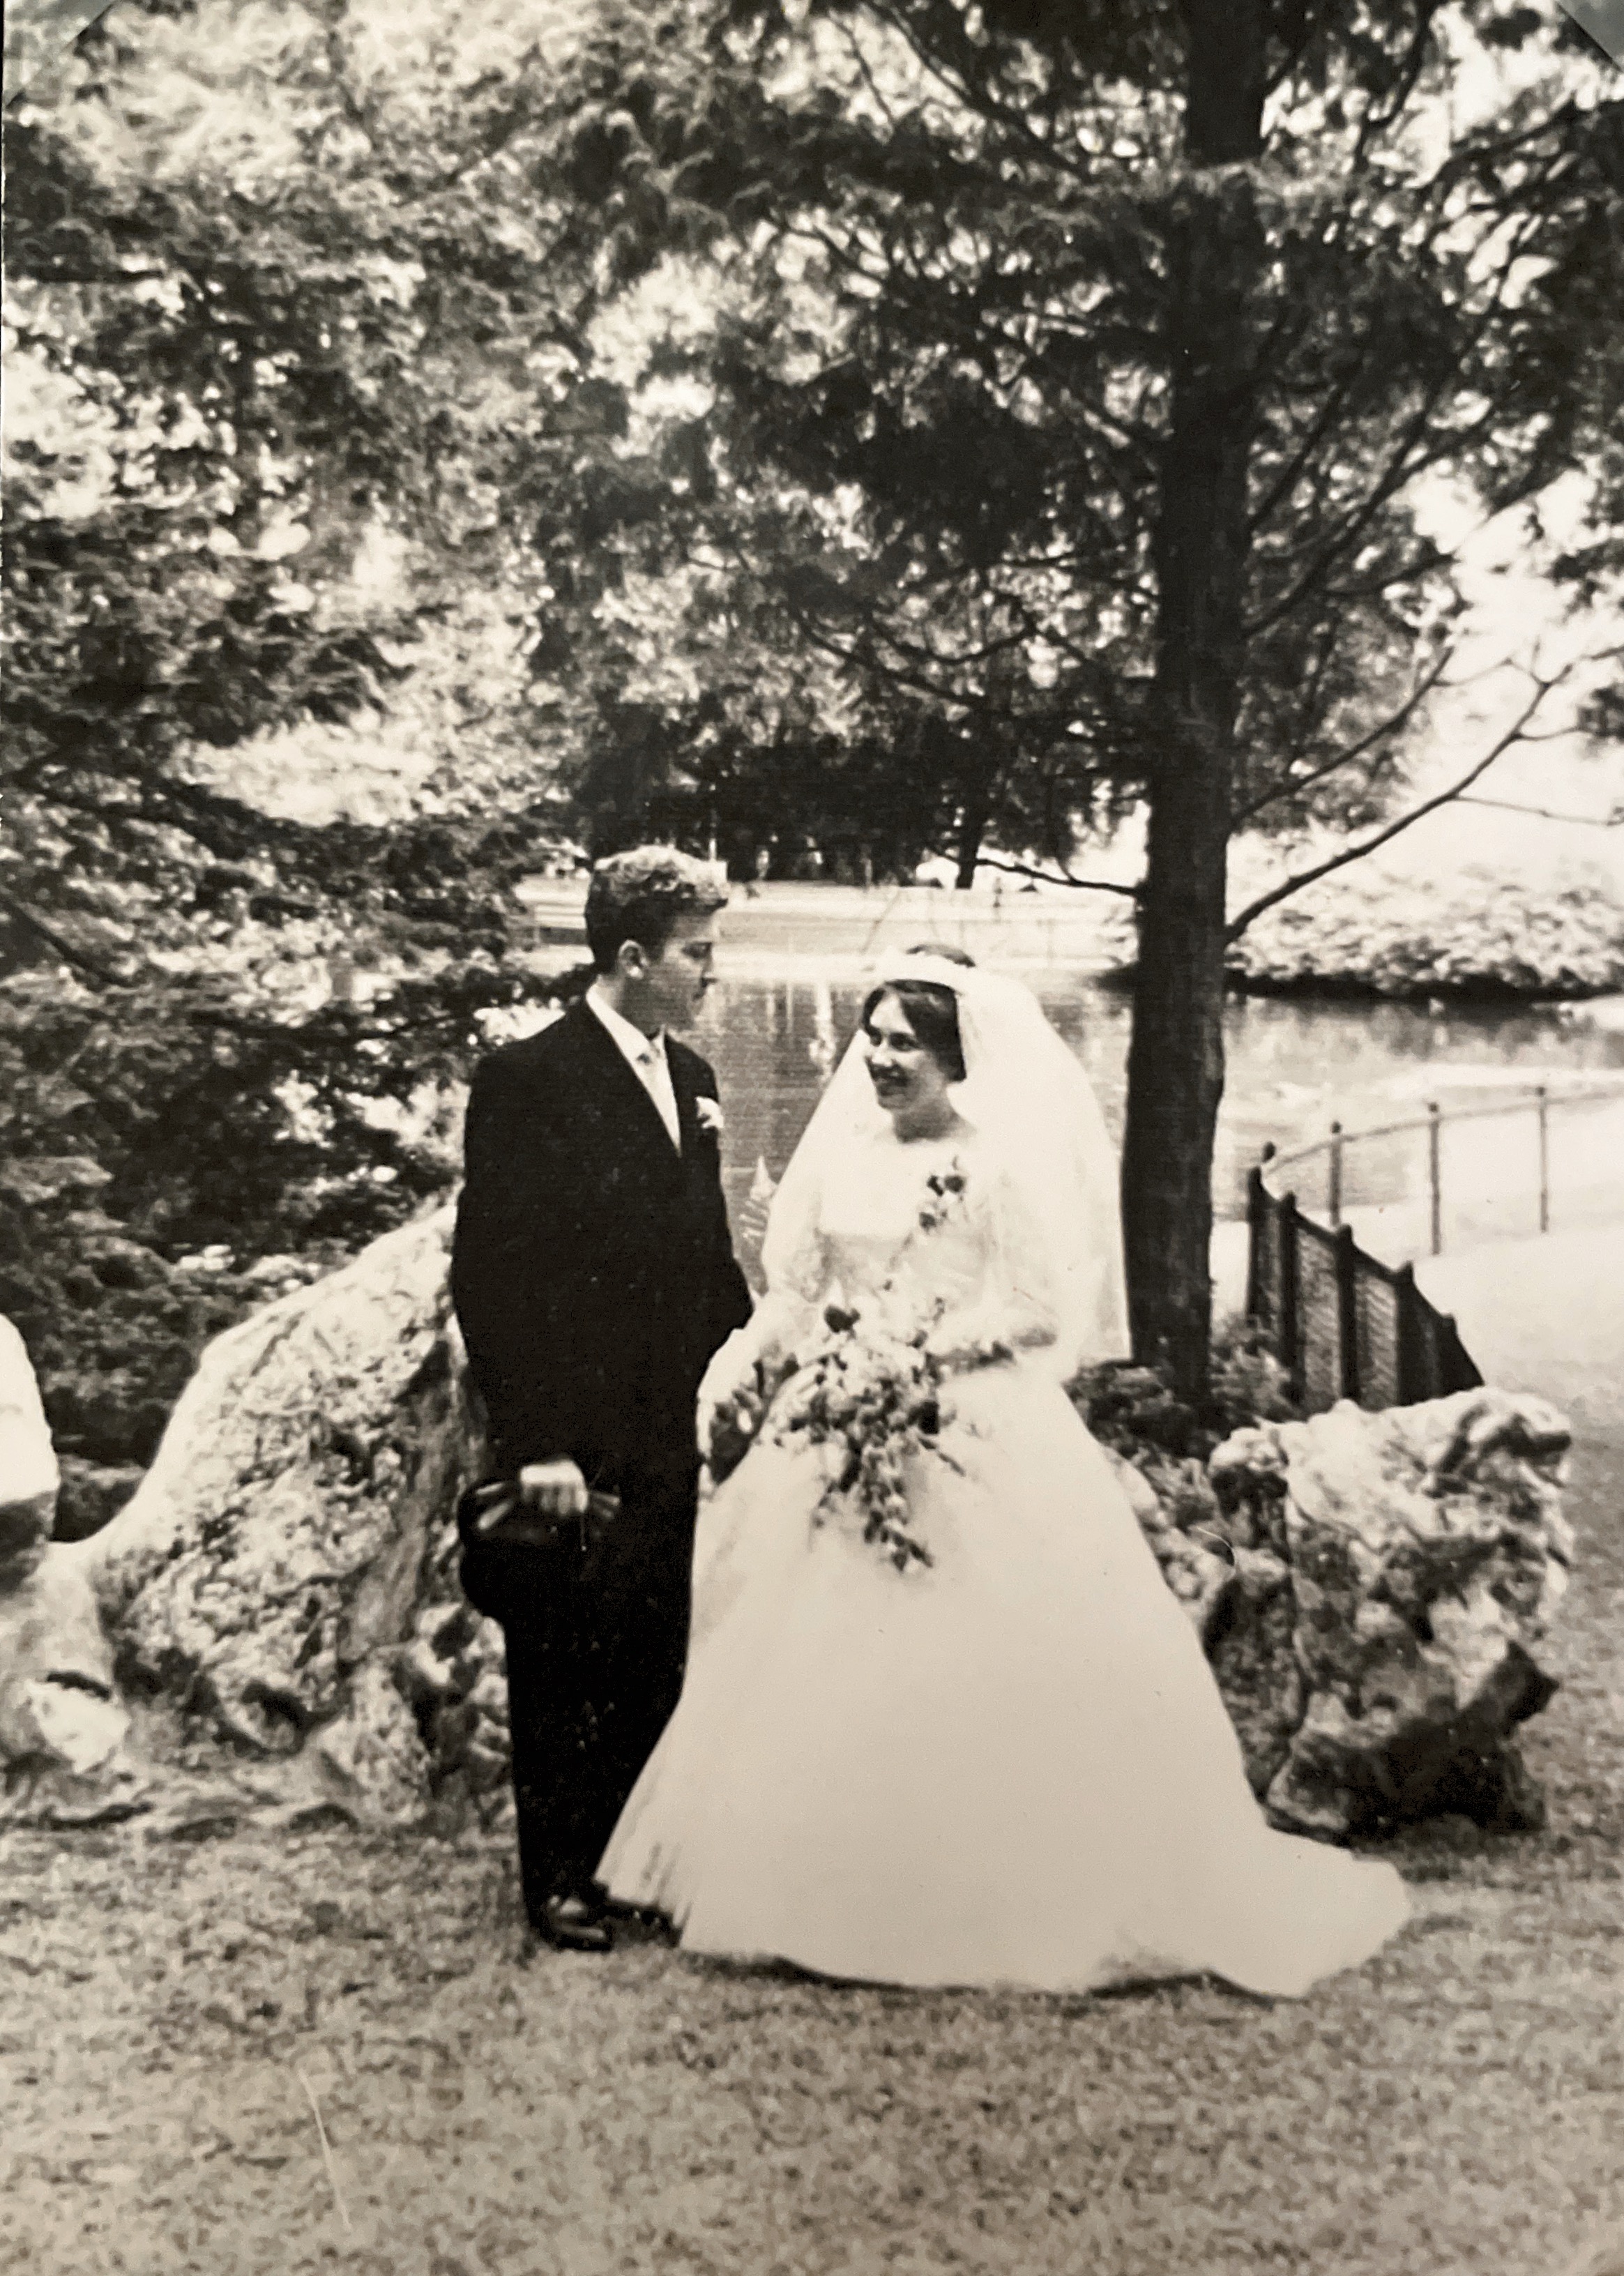 My parents wedding 12 July 1963